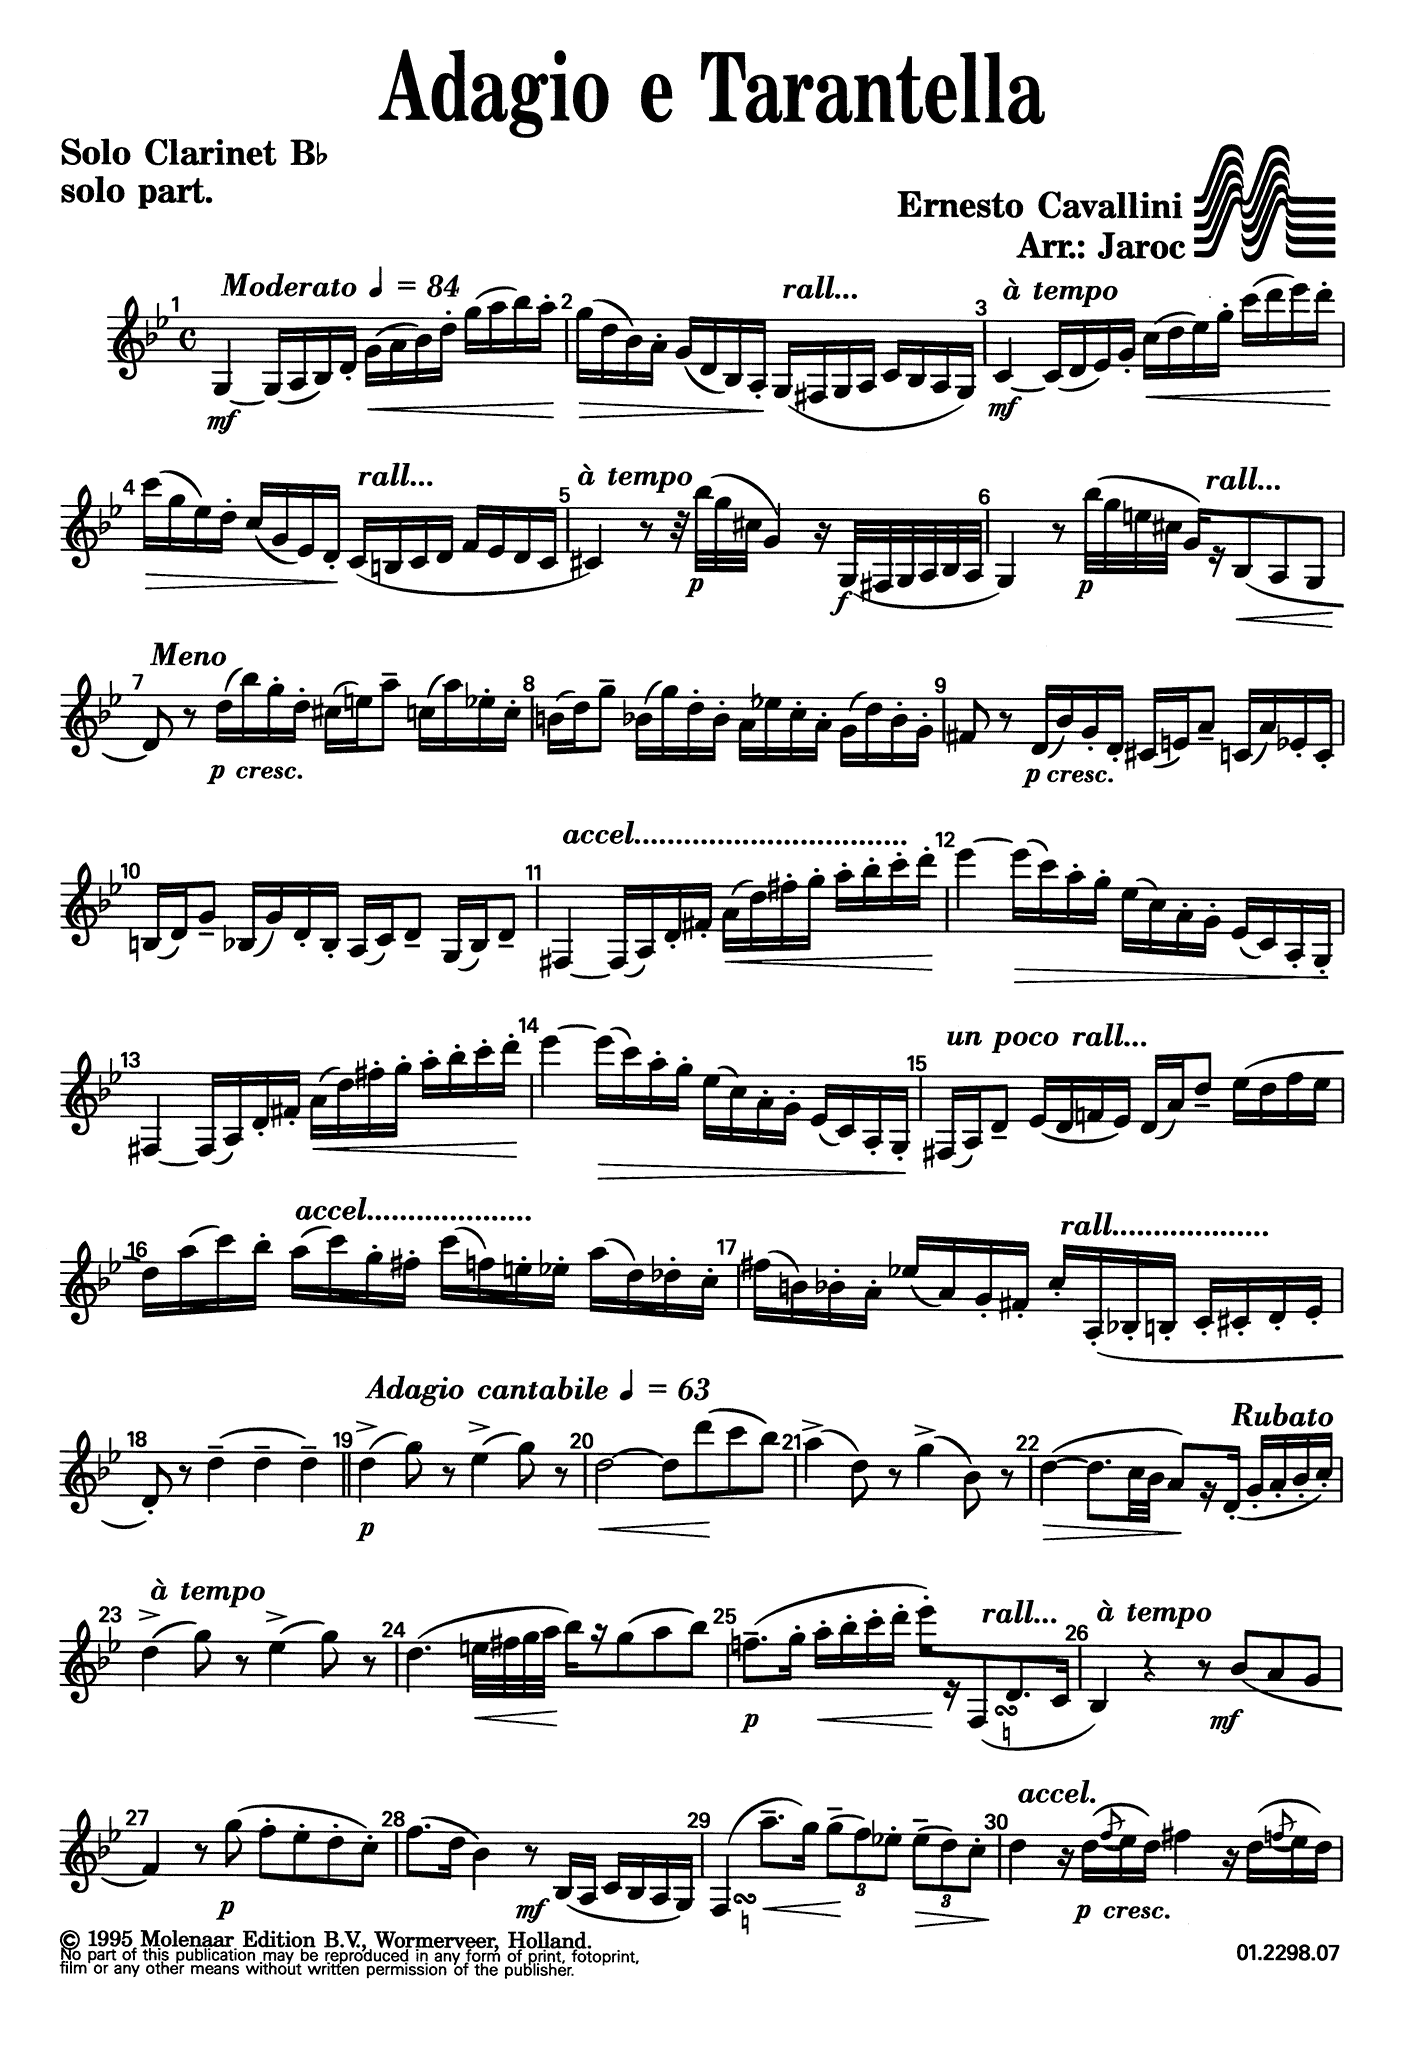 Adagio e Tarantella wind ensemble Clarinet part